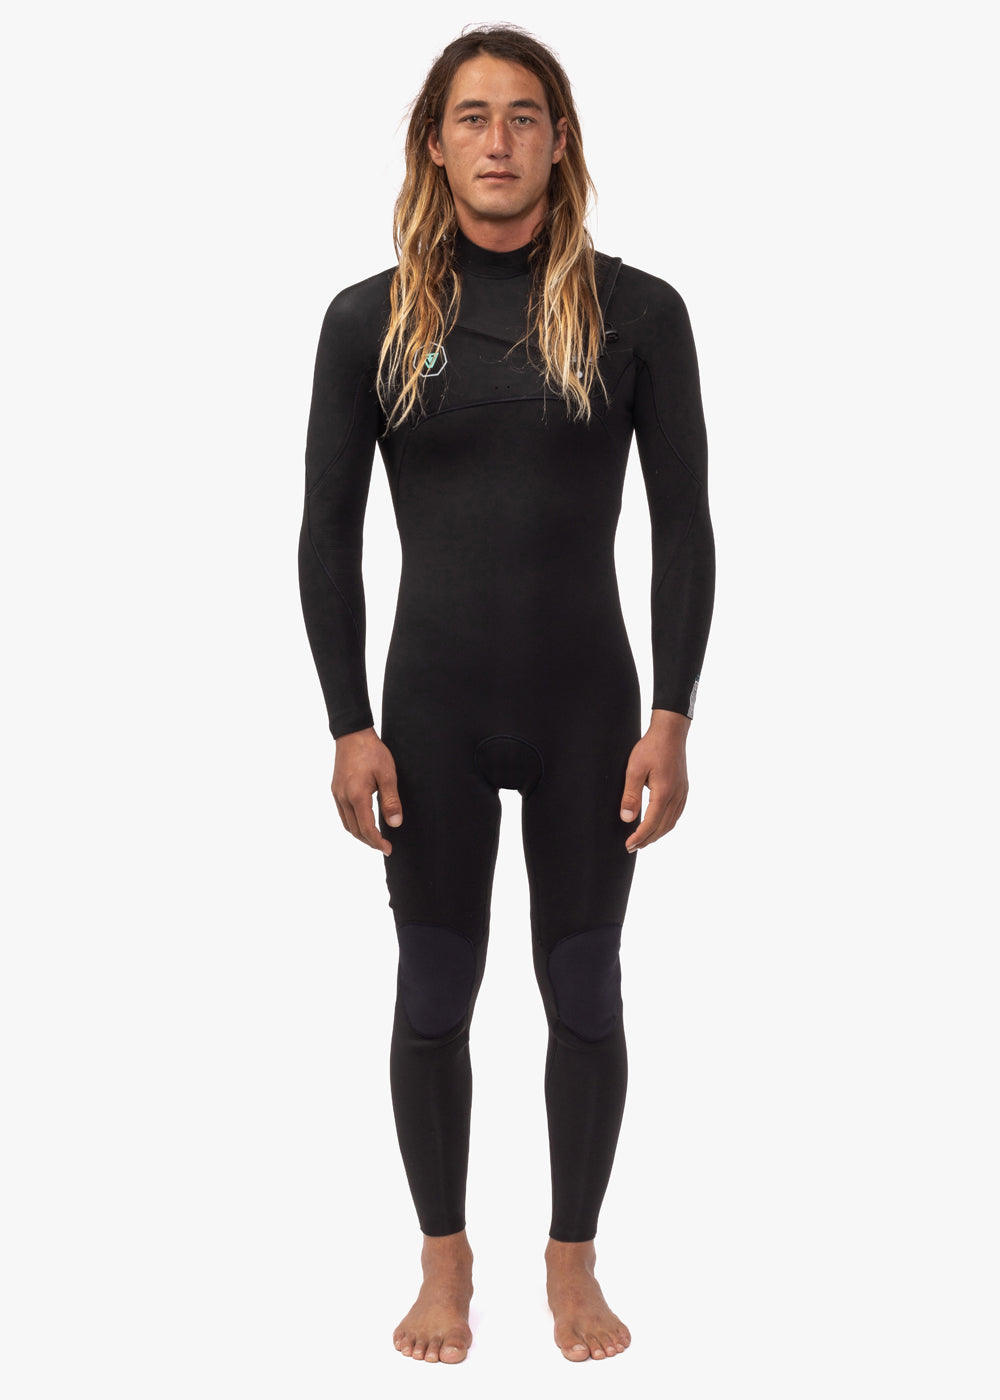 7 Seas 4-3 Full Chest Zip Wetsuit - Black with Jade Logos